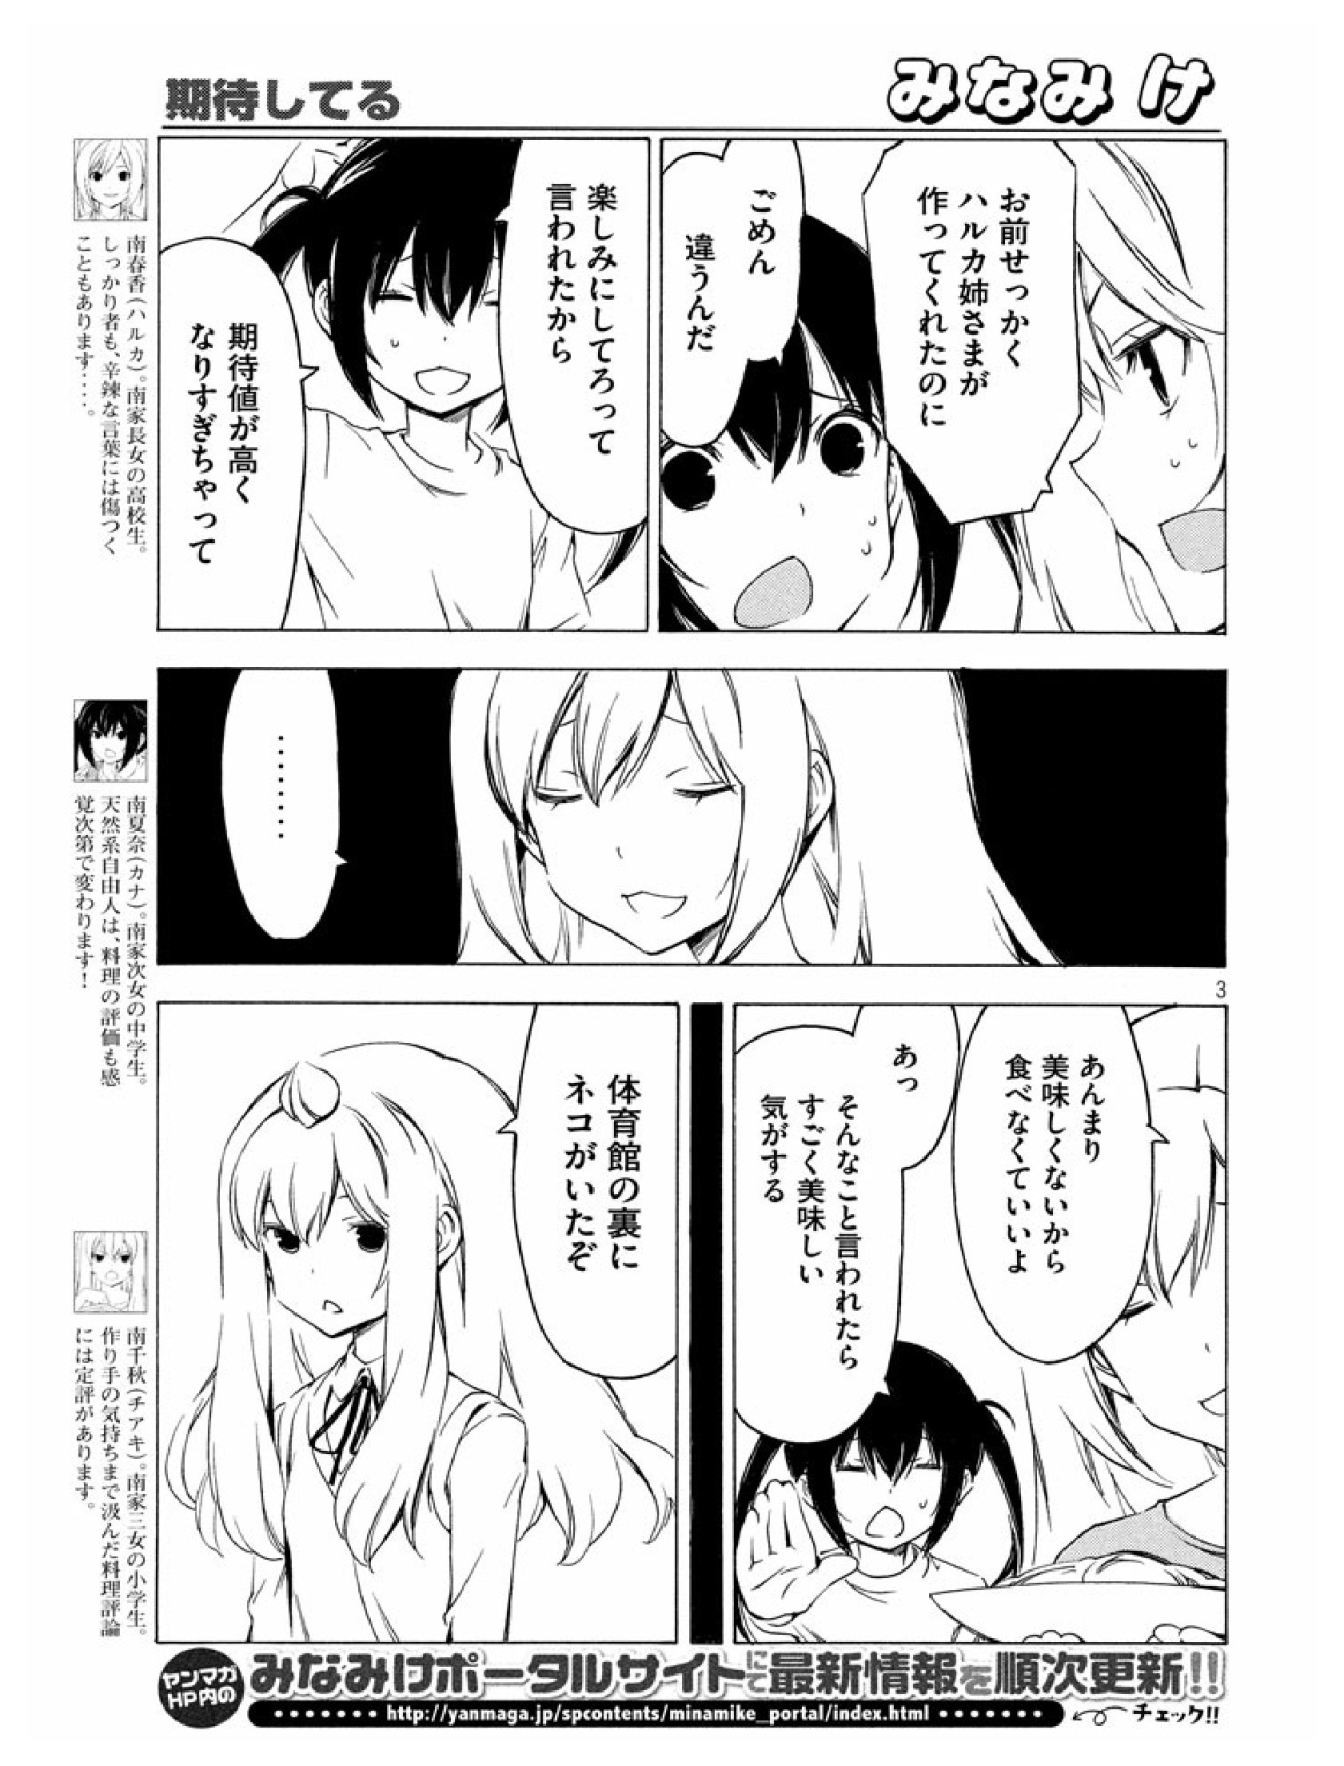 Minami-ke - Chapter 272 - Page 3